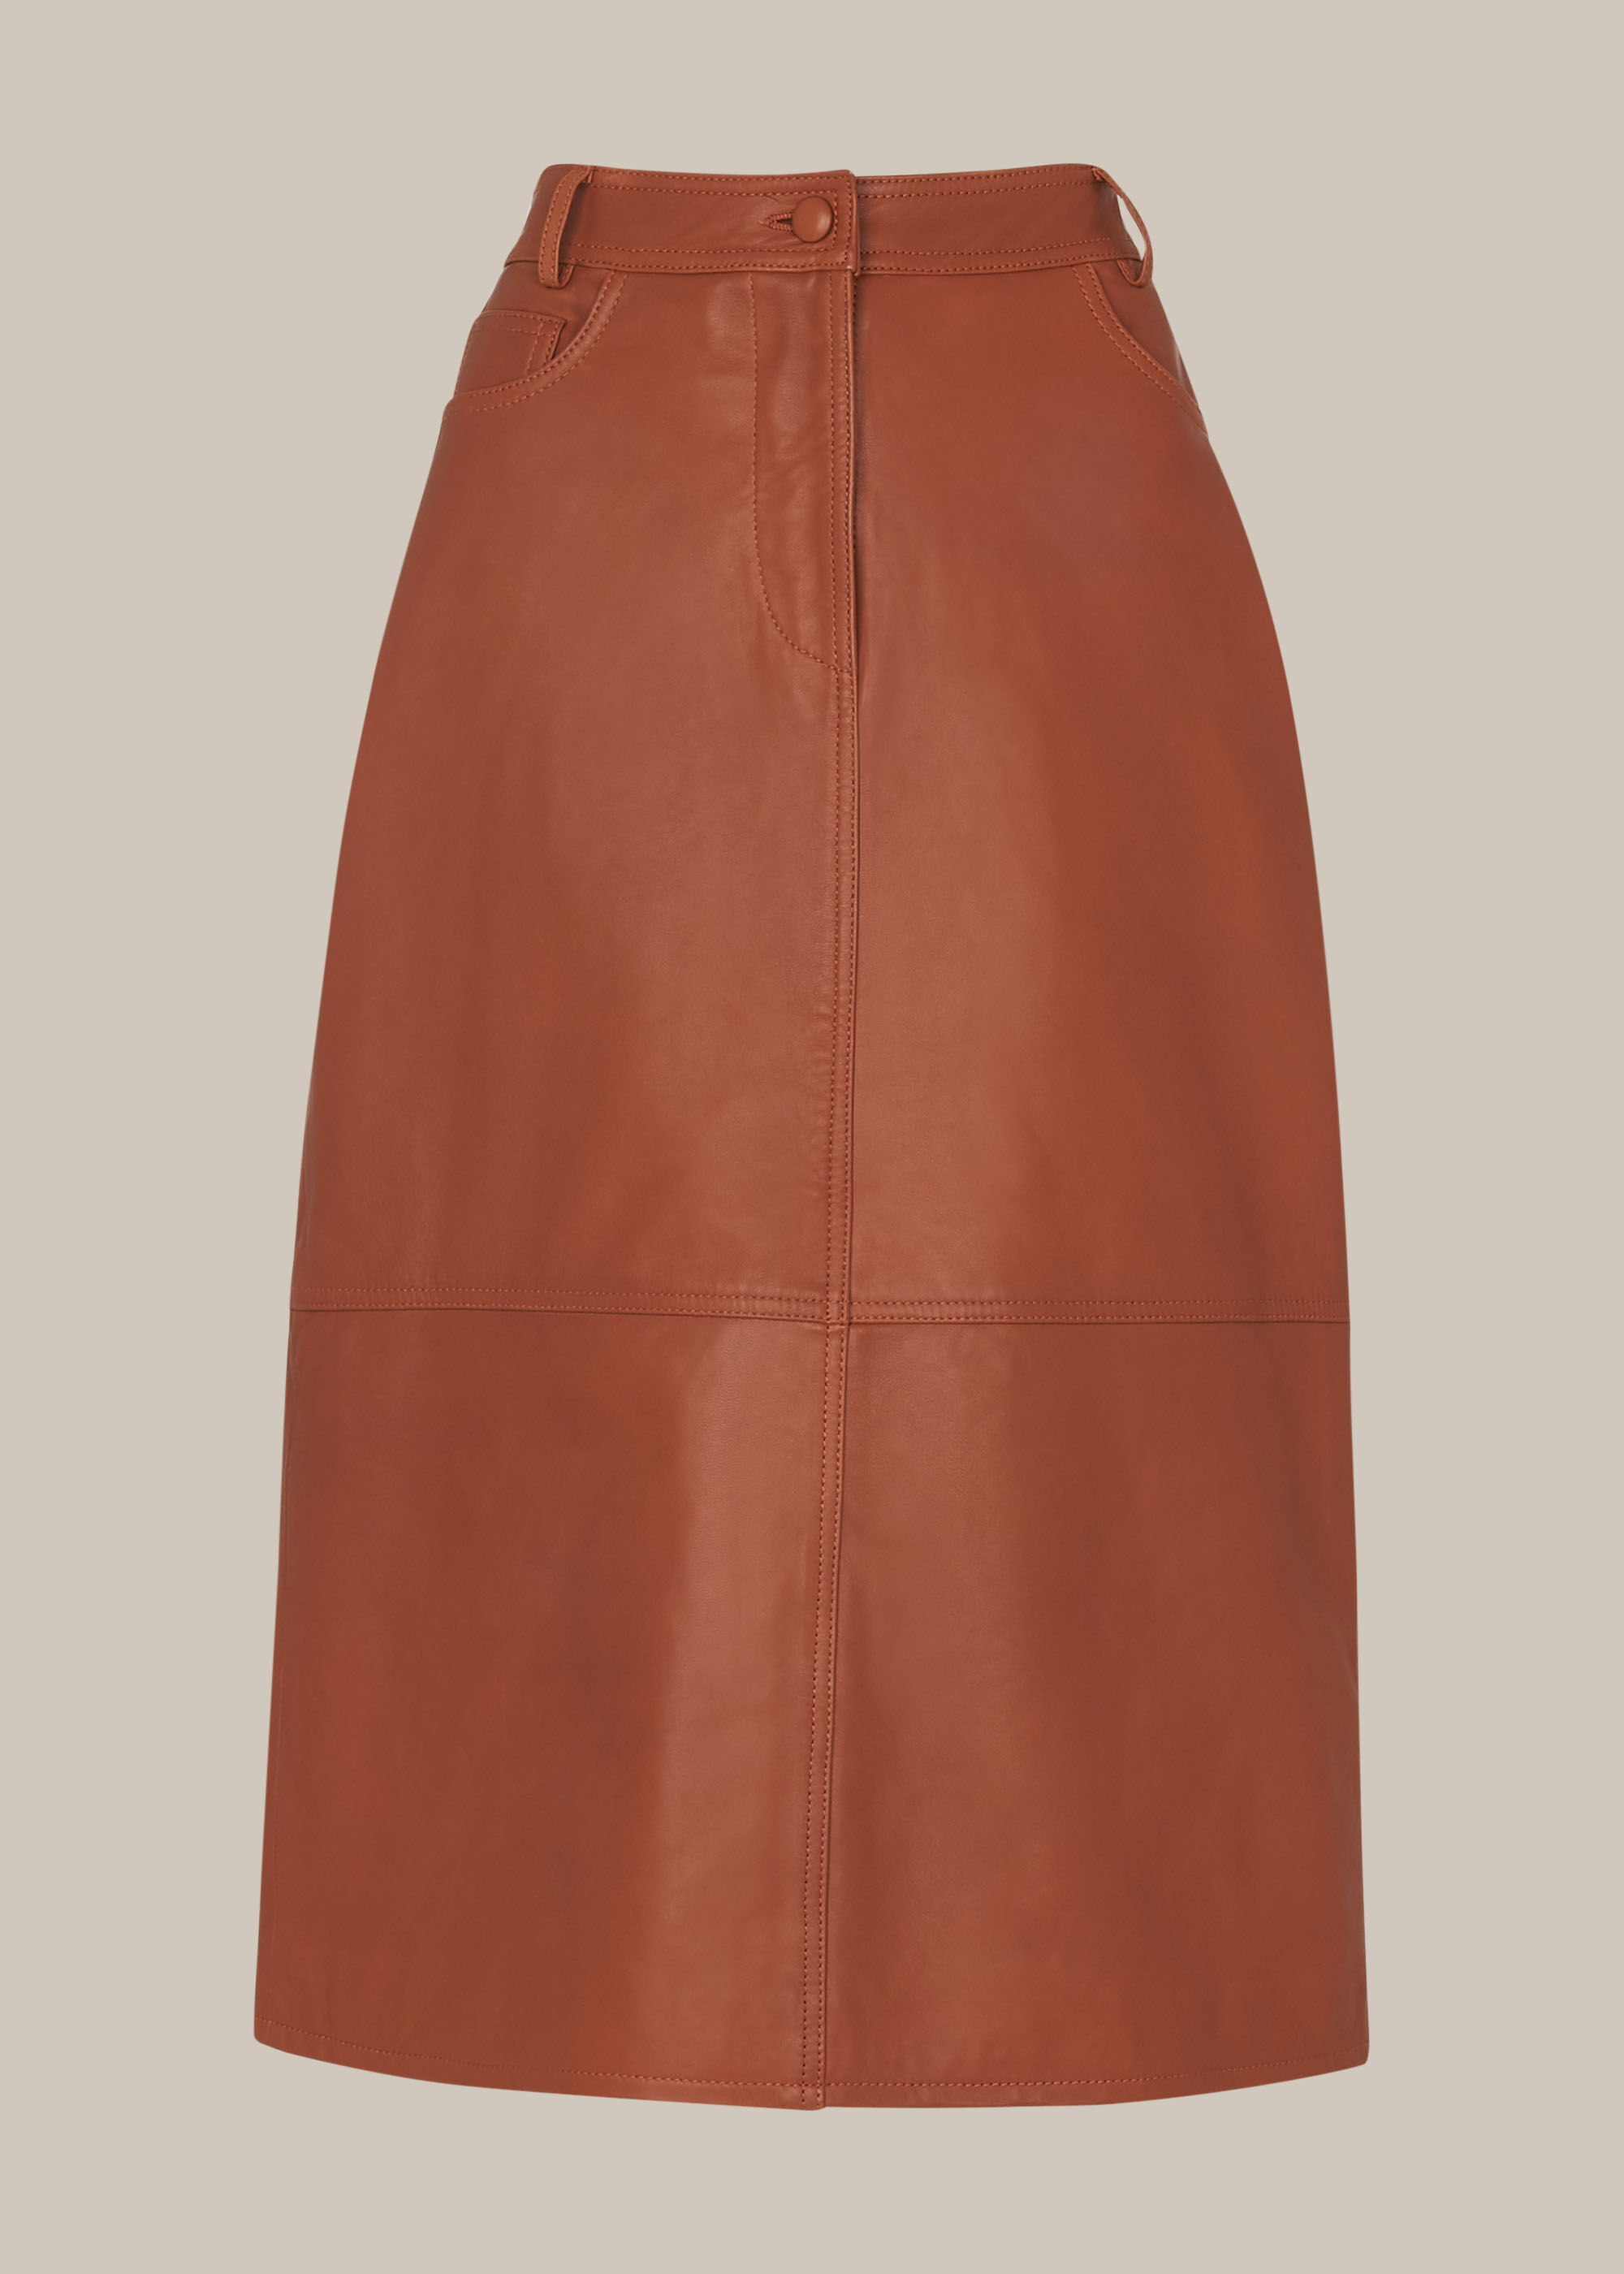 tan leather skirt